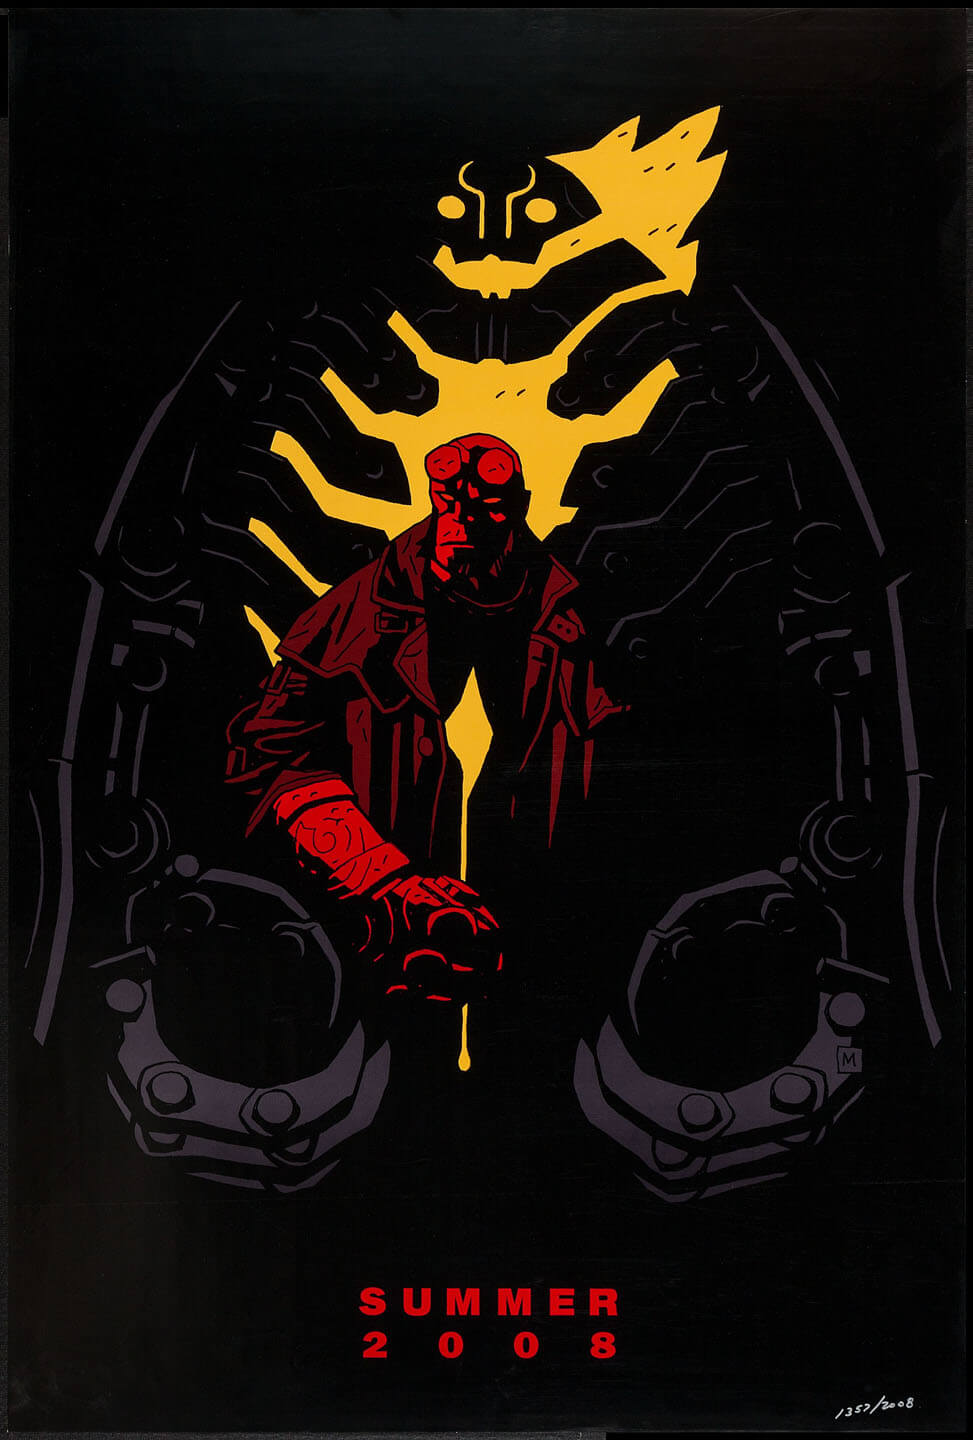 Hellboy II: The Golden Army